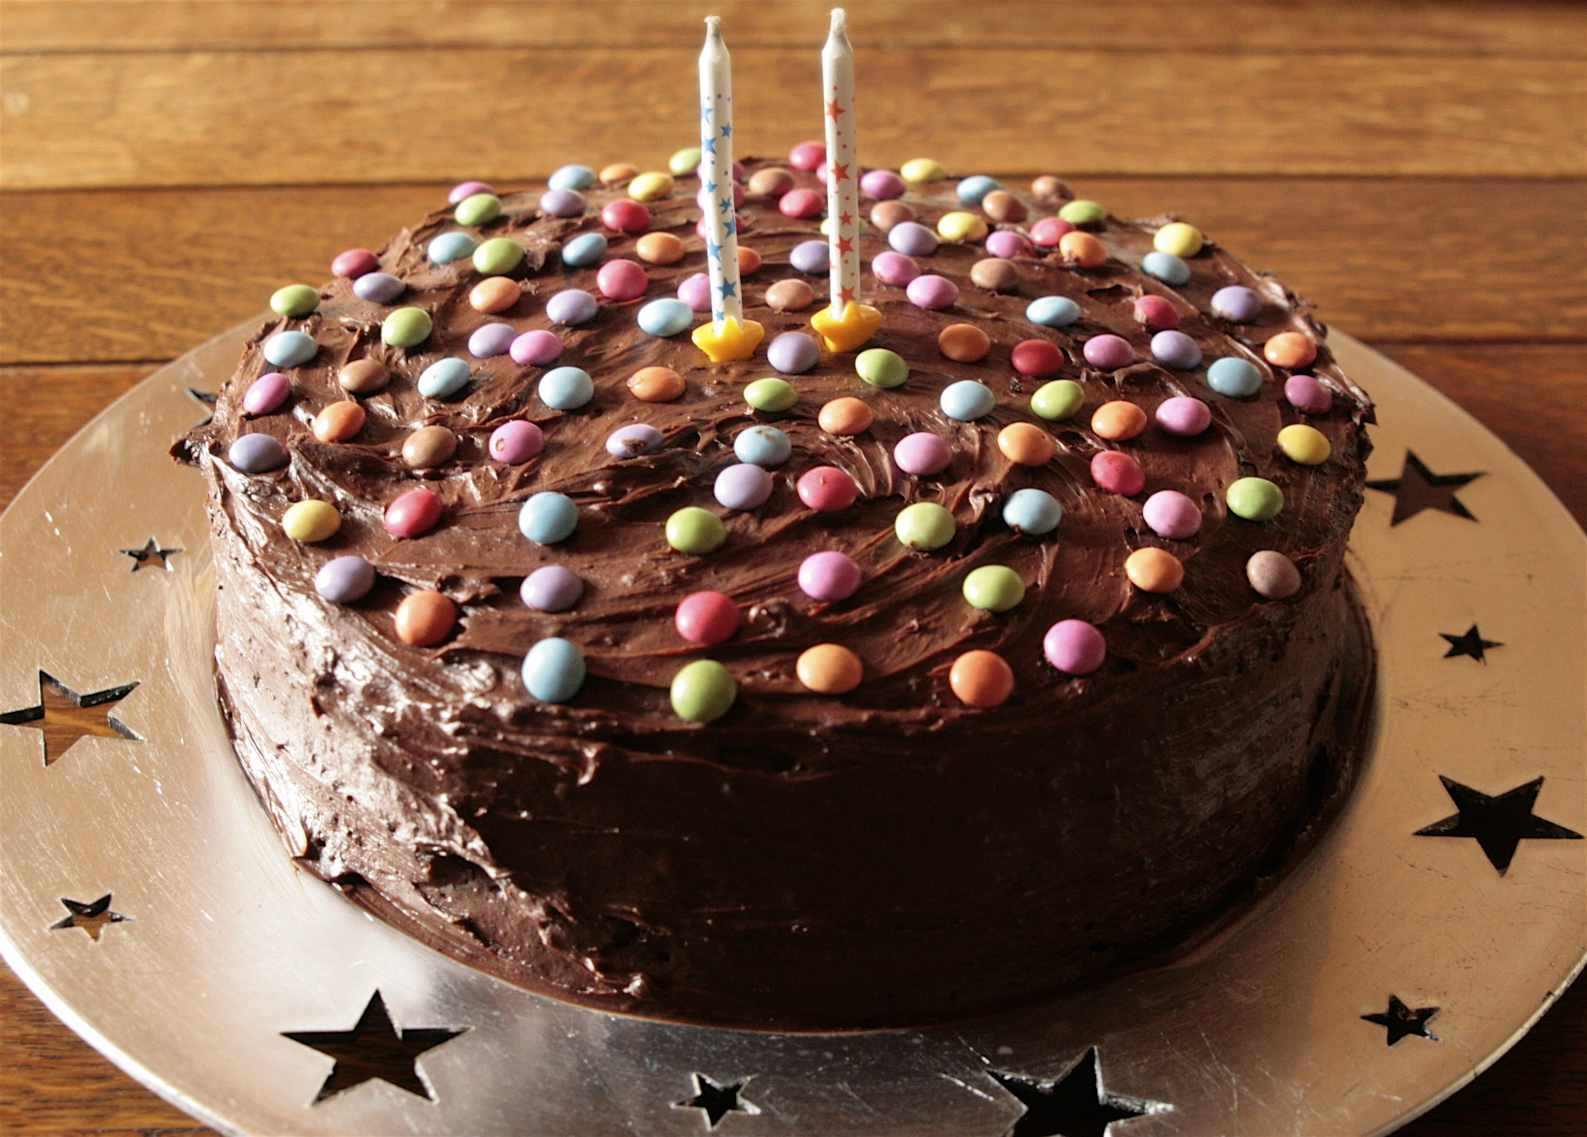 Best ideas about Chocolate Birthday Cake
. Save or Pin Chocolate Birthday Cake Now.